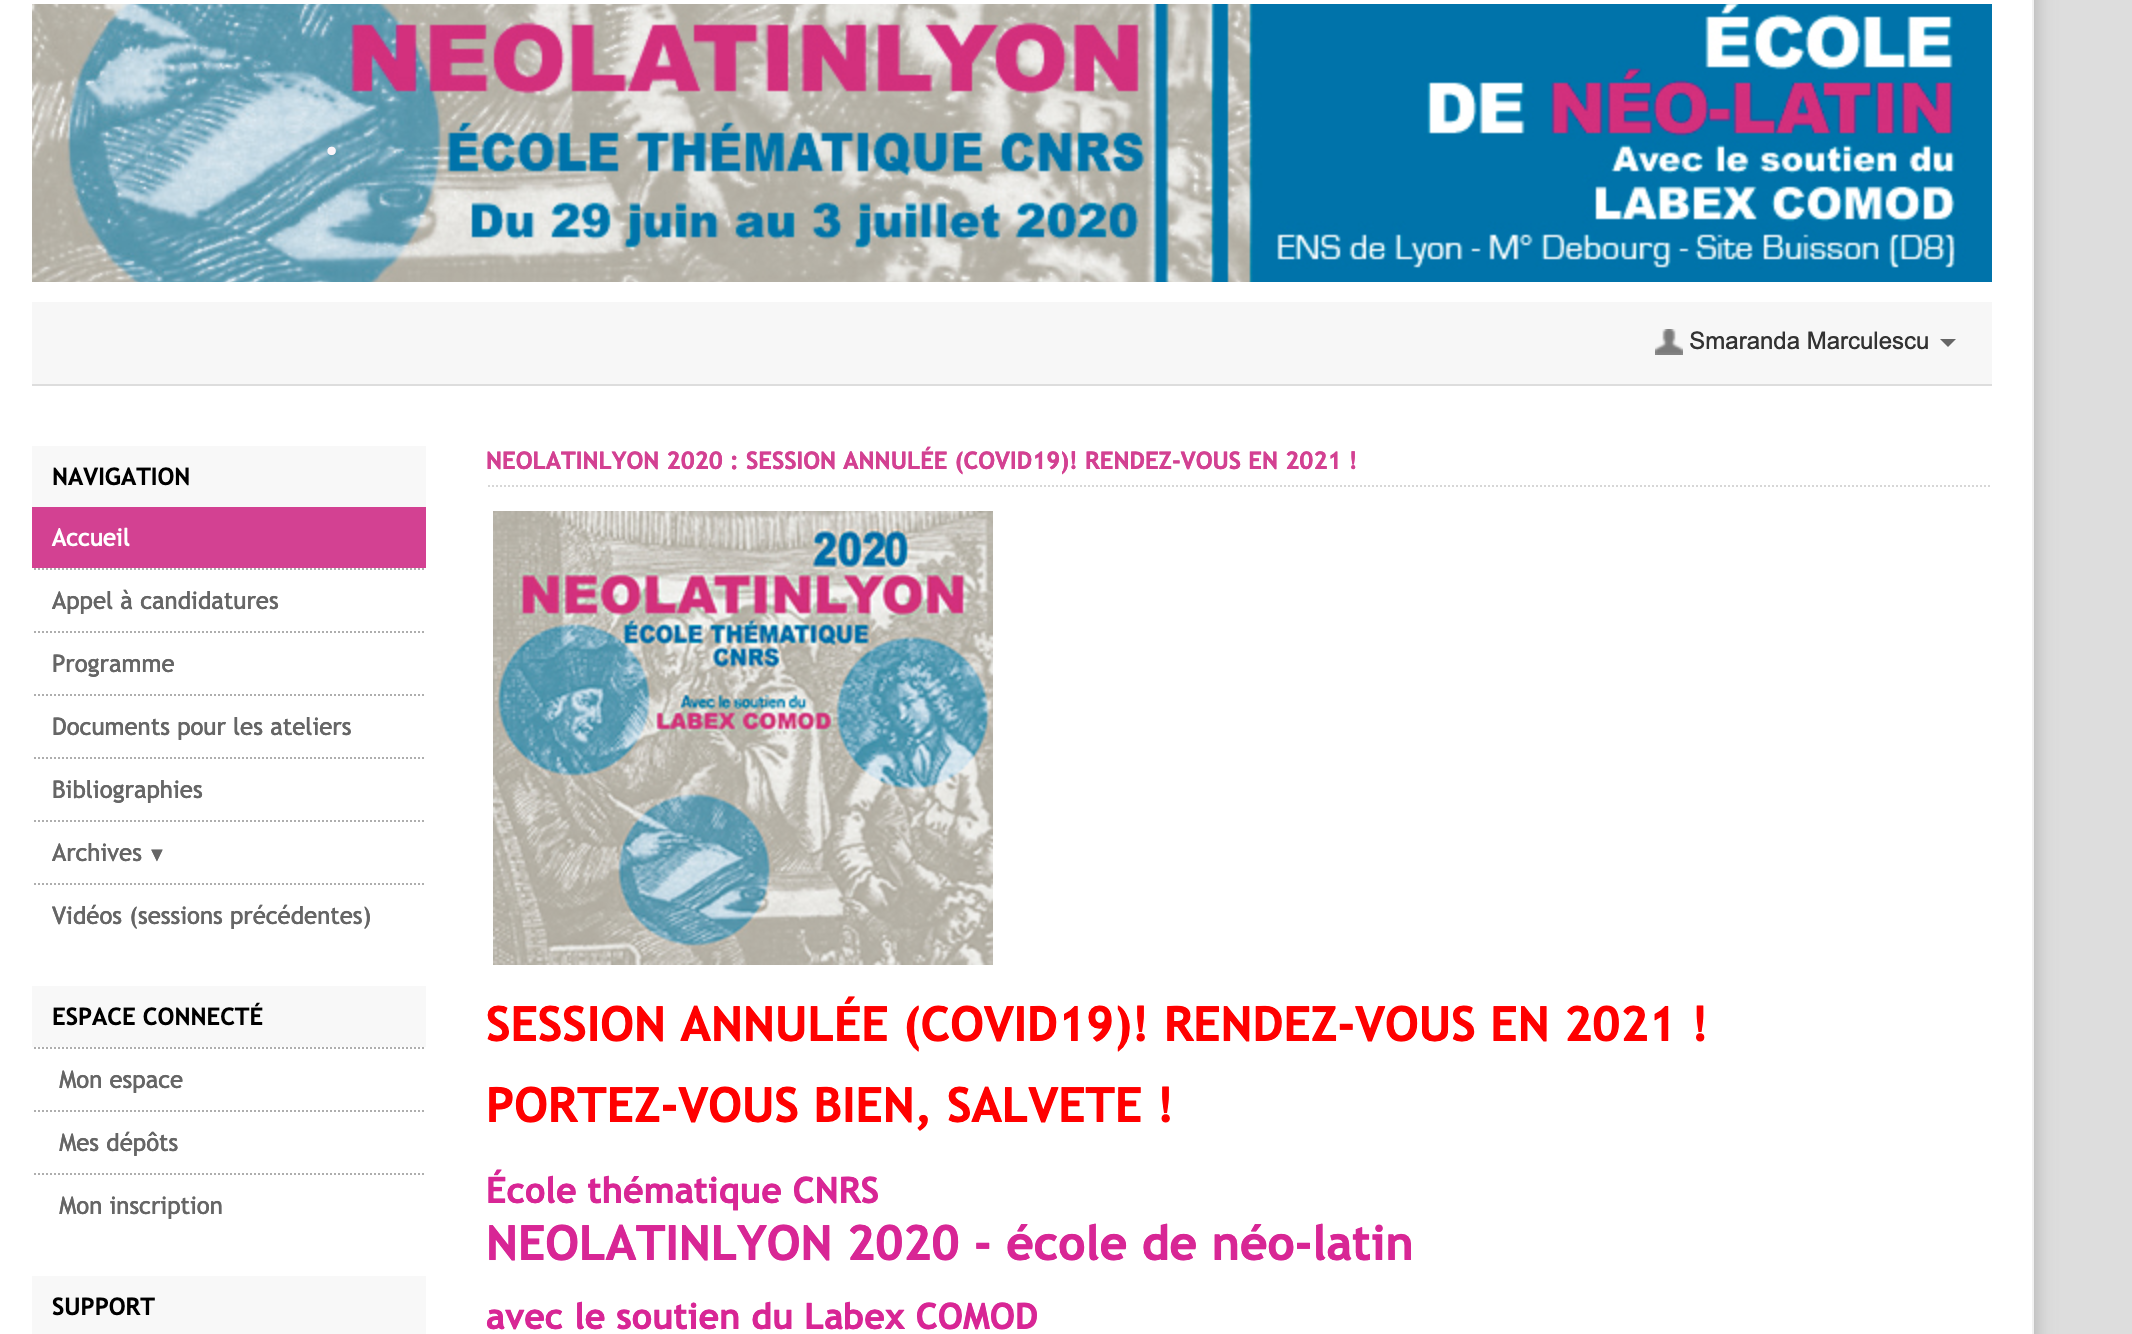 Neolatinlyon 2020 : session annulée (COVID 19)